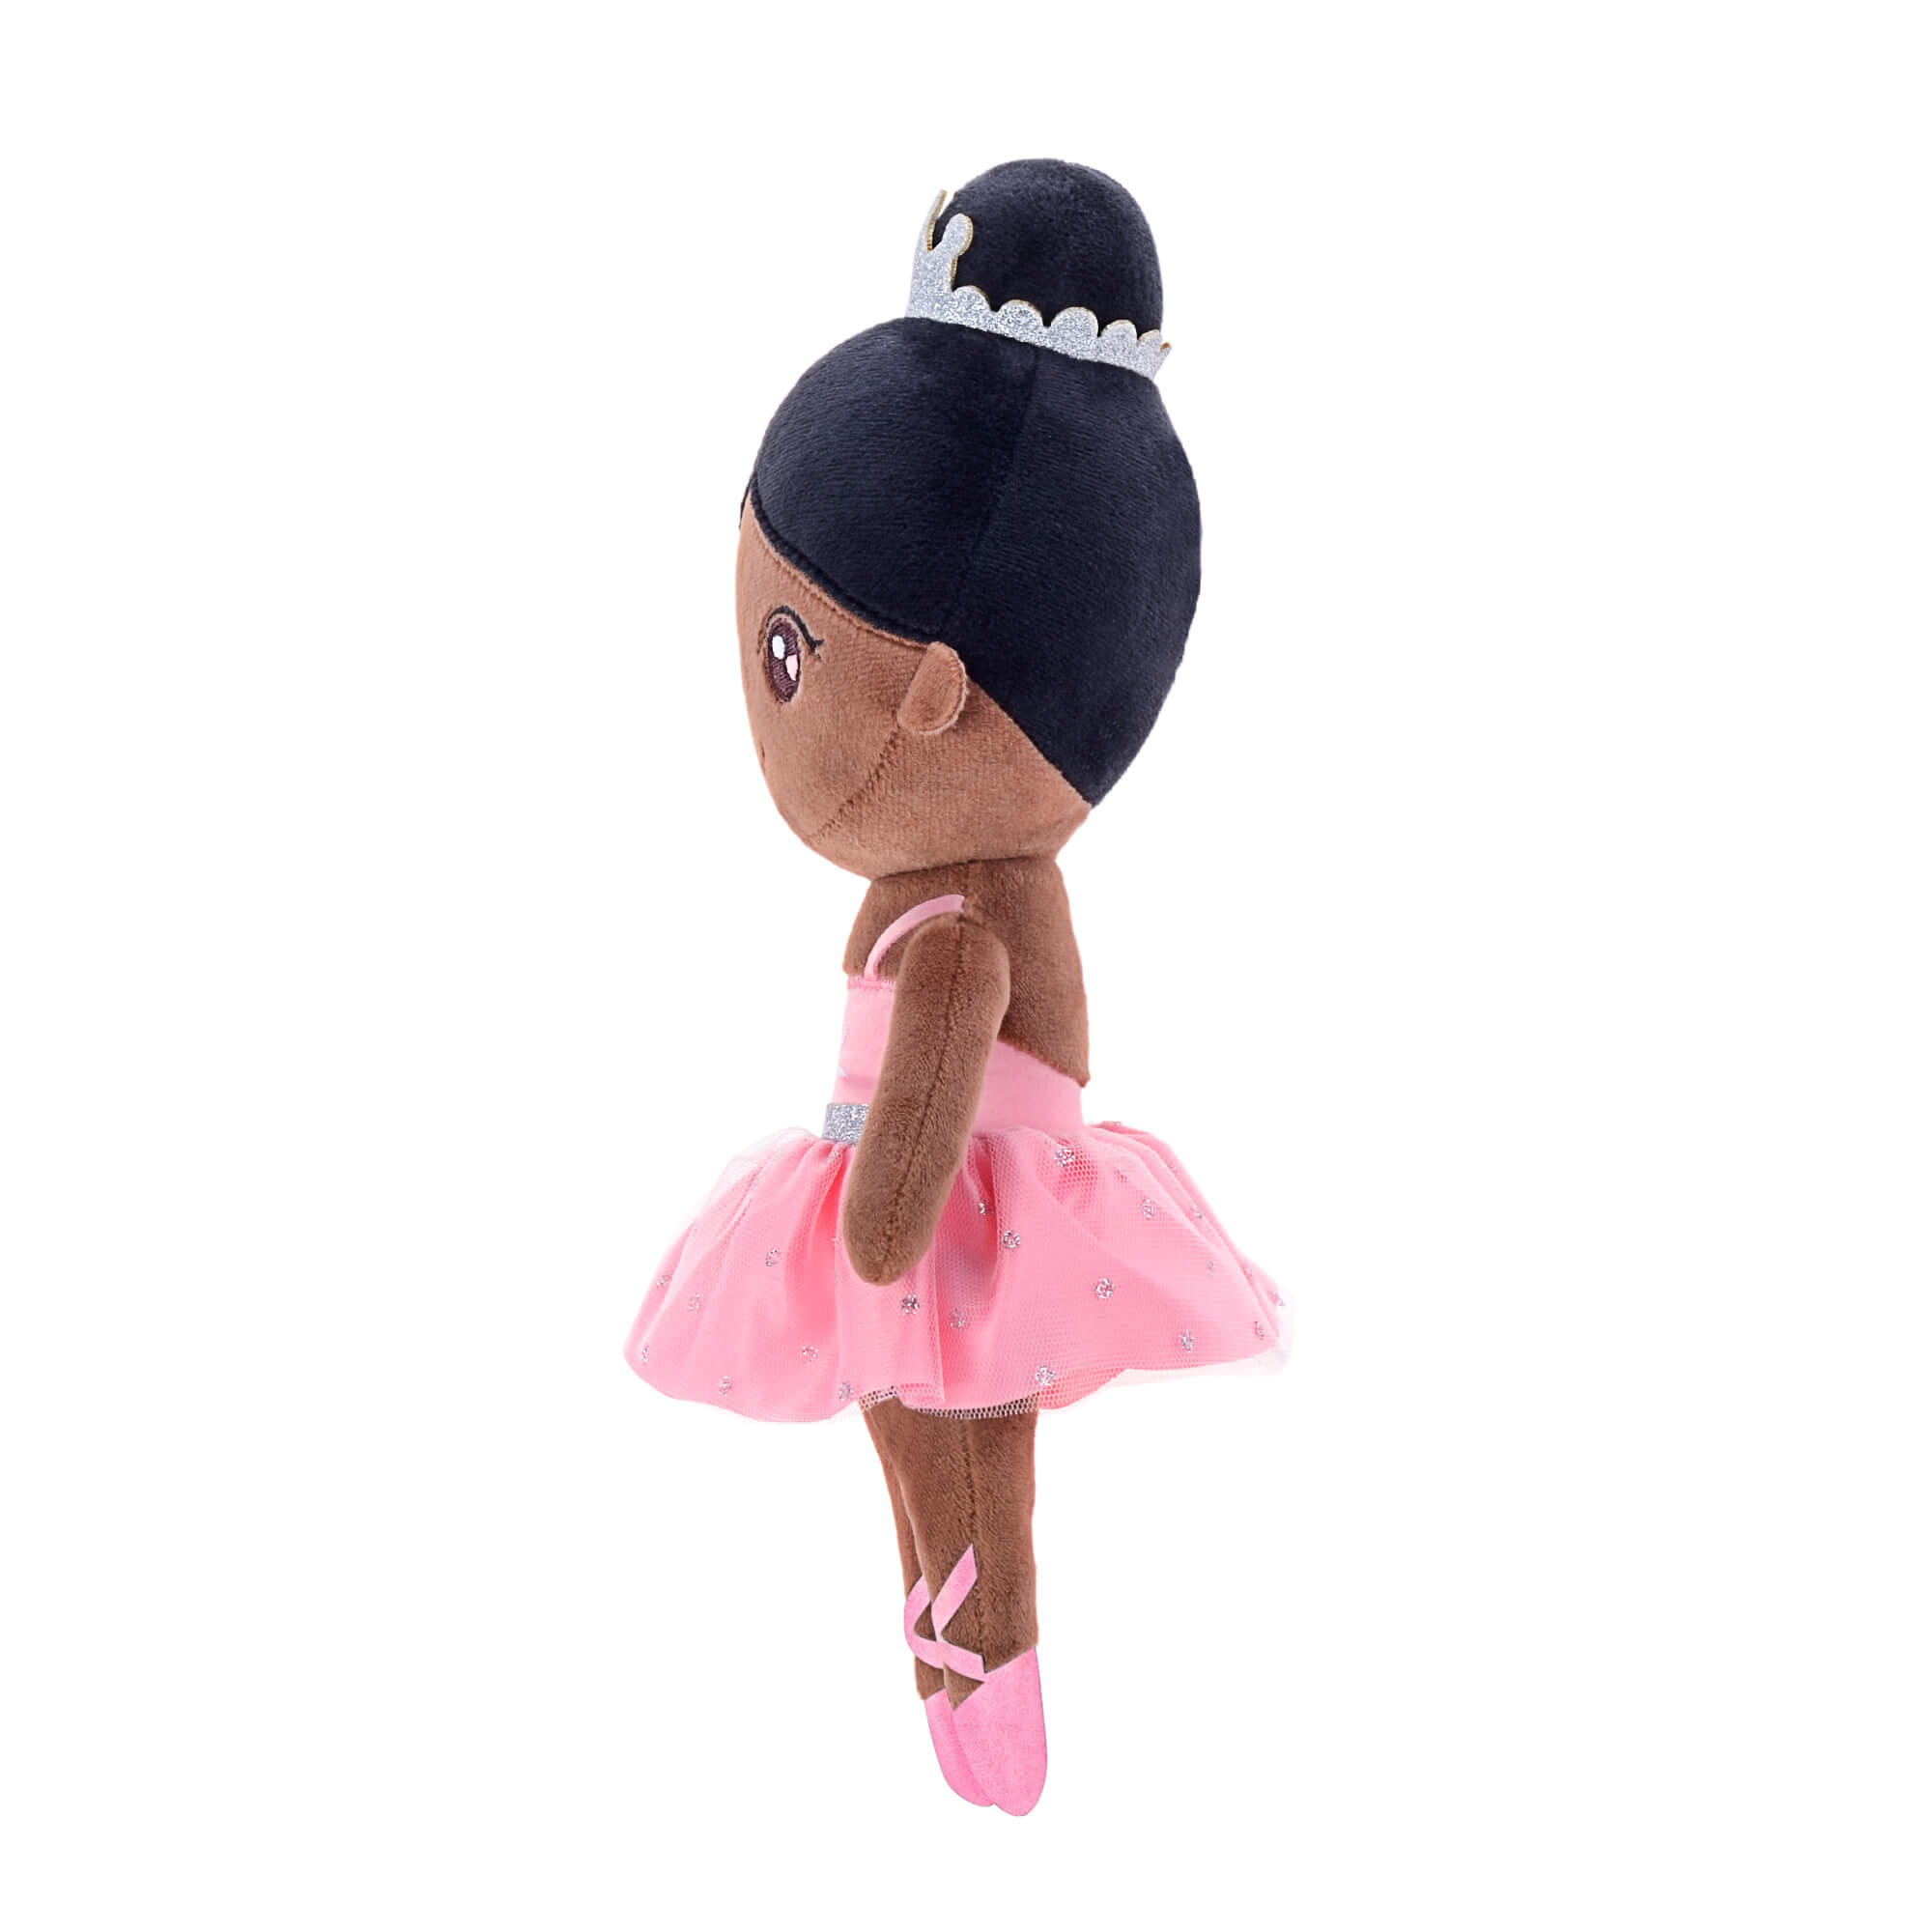 Gloveleya 13-inch Personalized Plush Dolls Ballerina Series Tanned Skin Ballet Dream